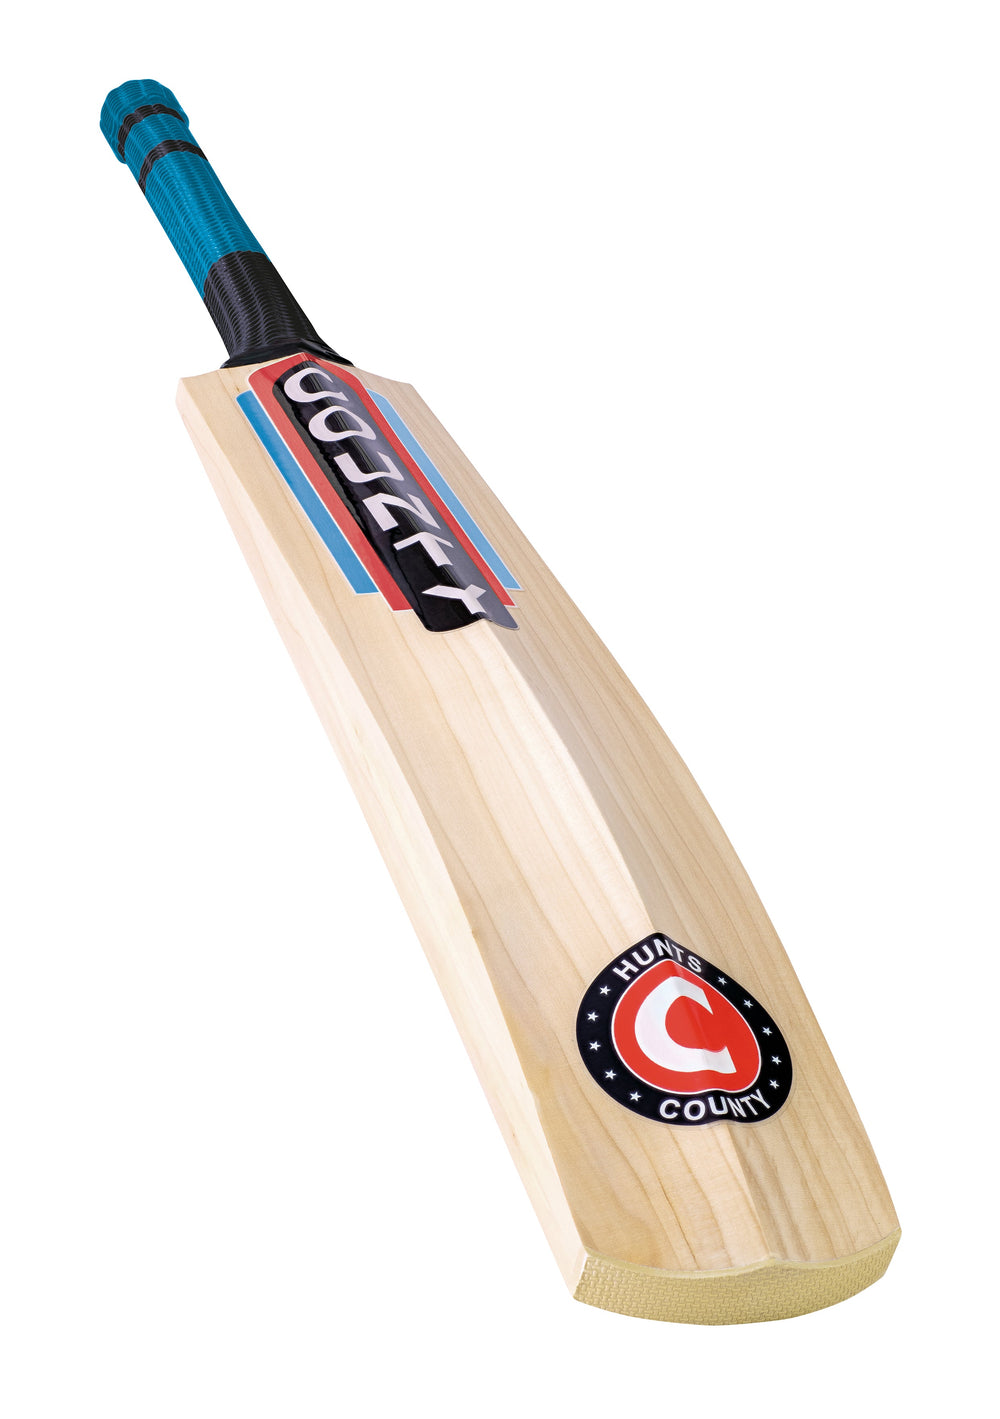 Hunts County Calidus Select Cricket Bat